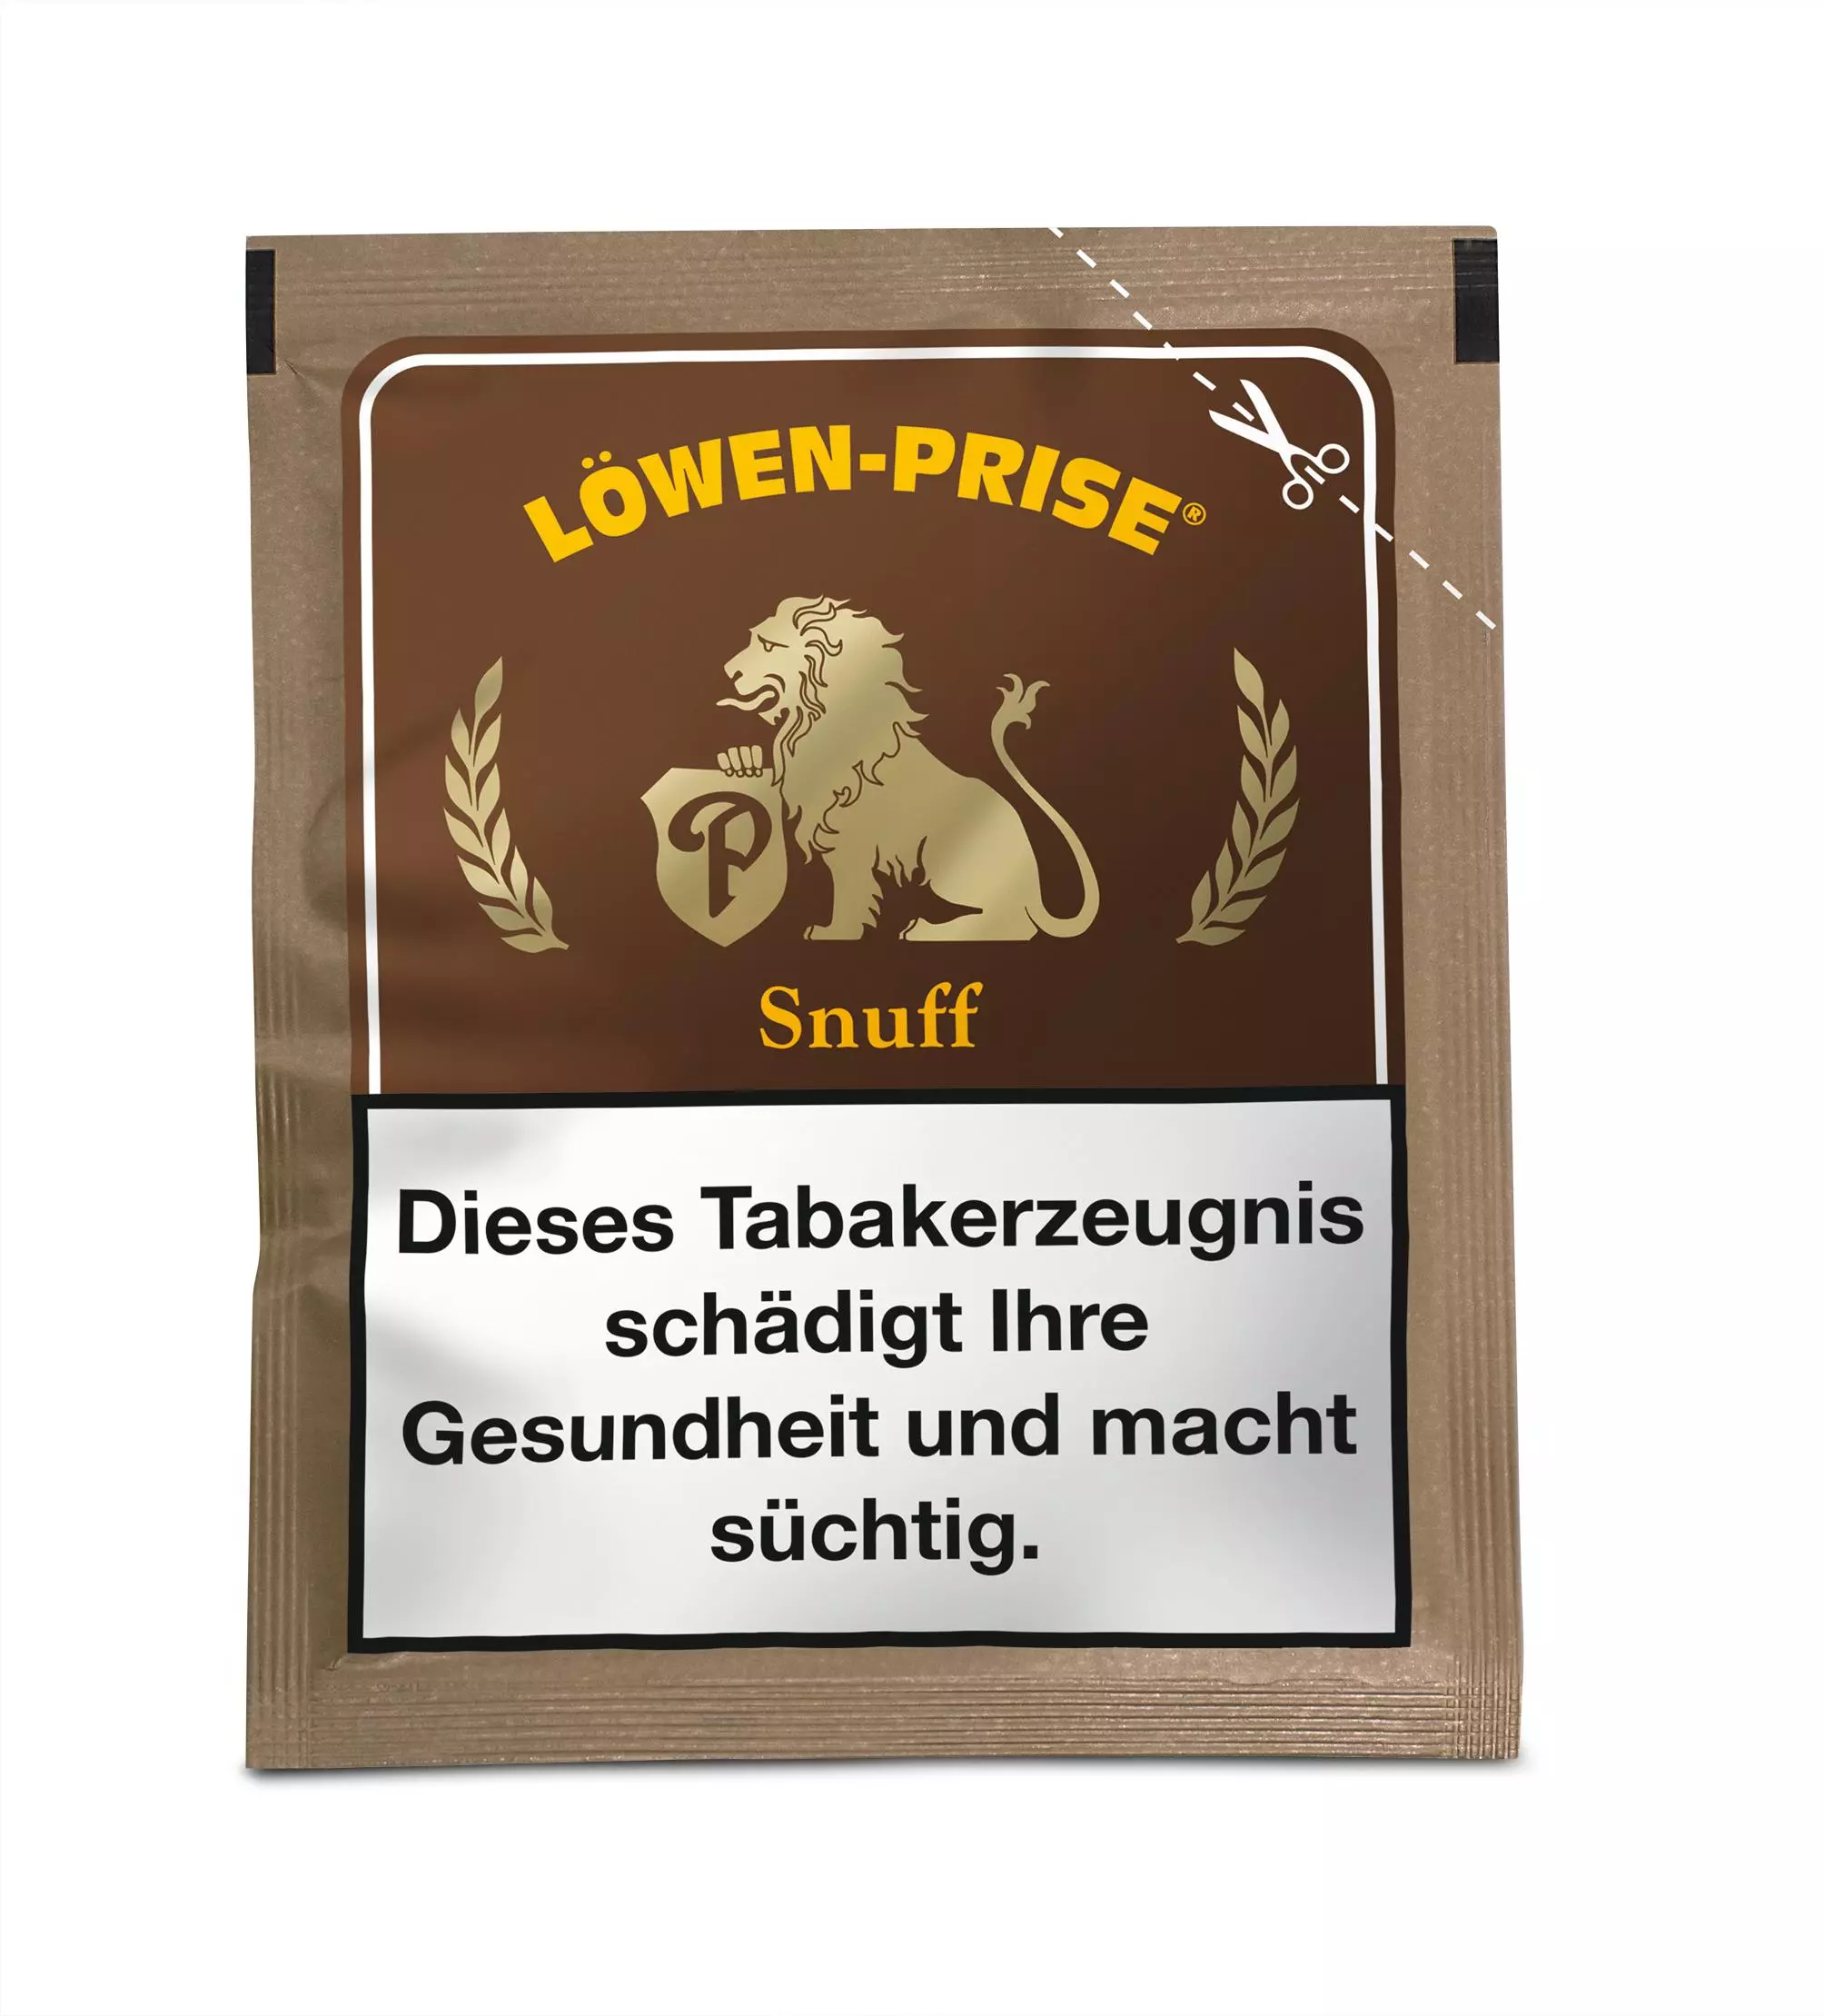 Löwenprise Snuff 10 x 10g Beutel